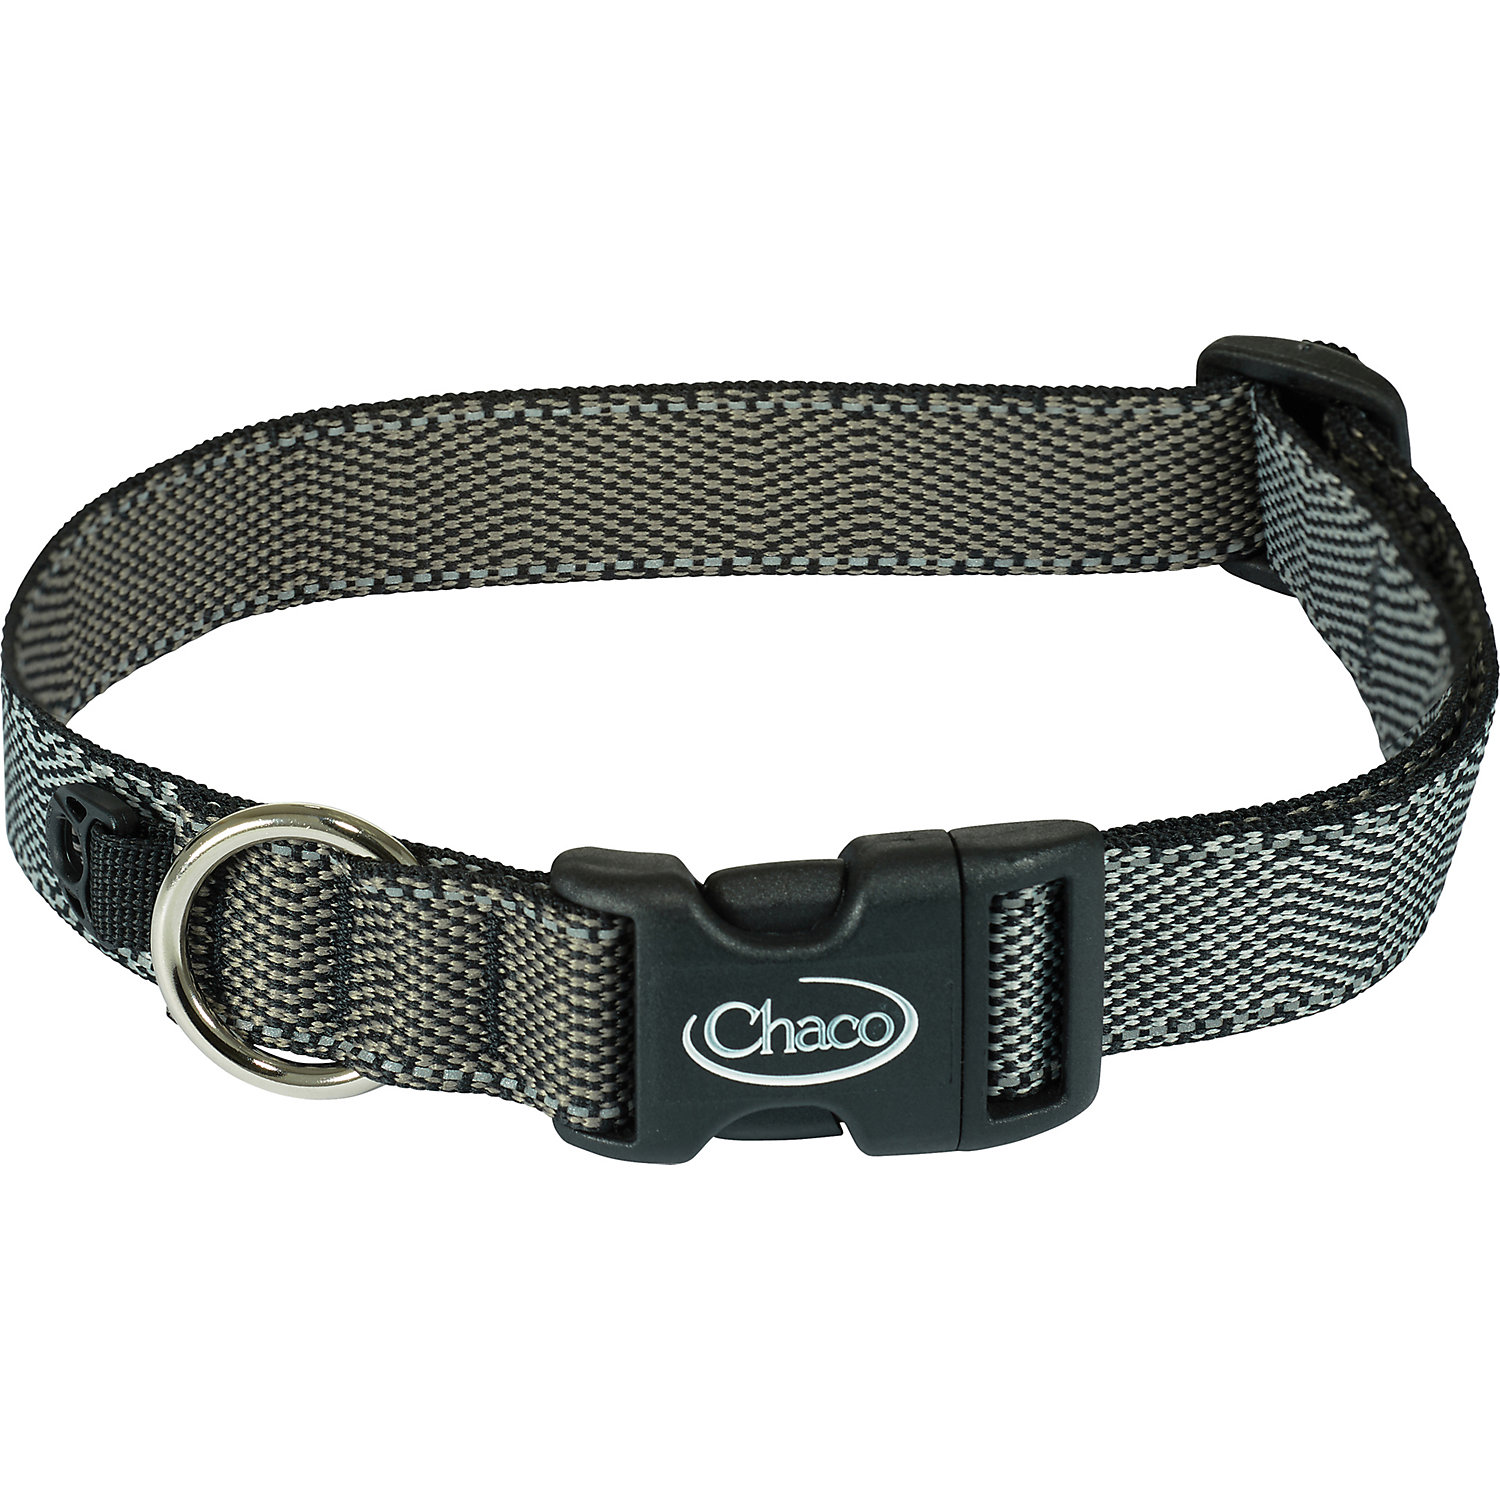 Chaco Dog Collar